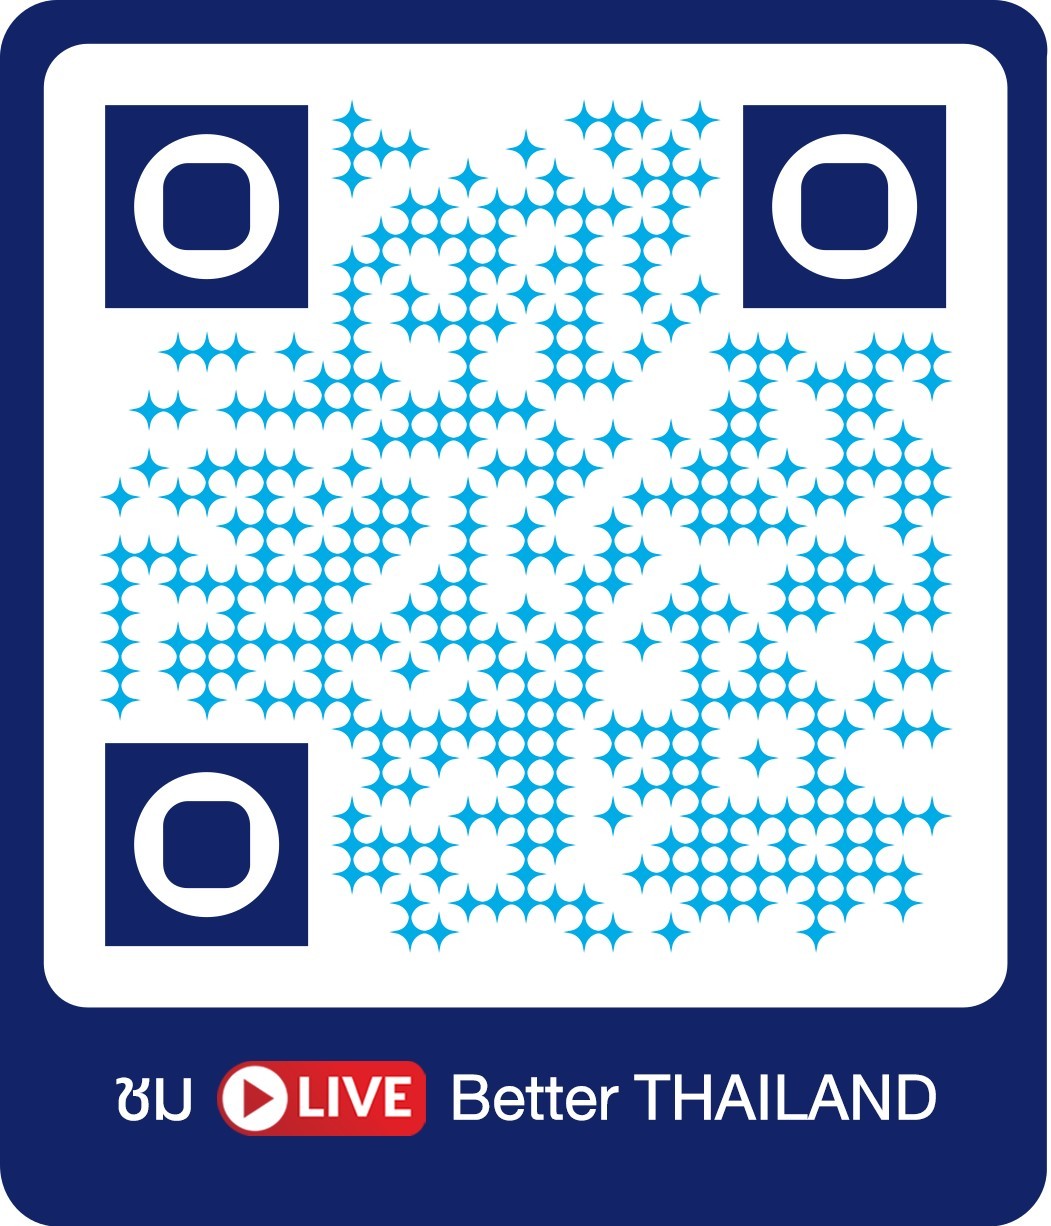 "Better Thailand Open Dialogue ถามมา-ตอบไป เพื่อประเทศไทยที่ดีกว่าเดิม”